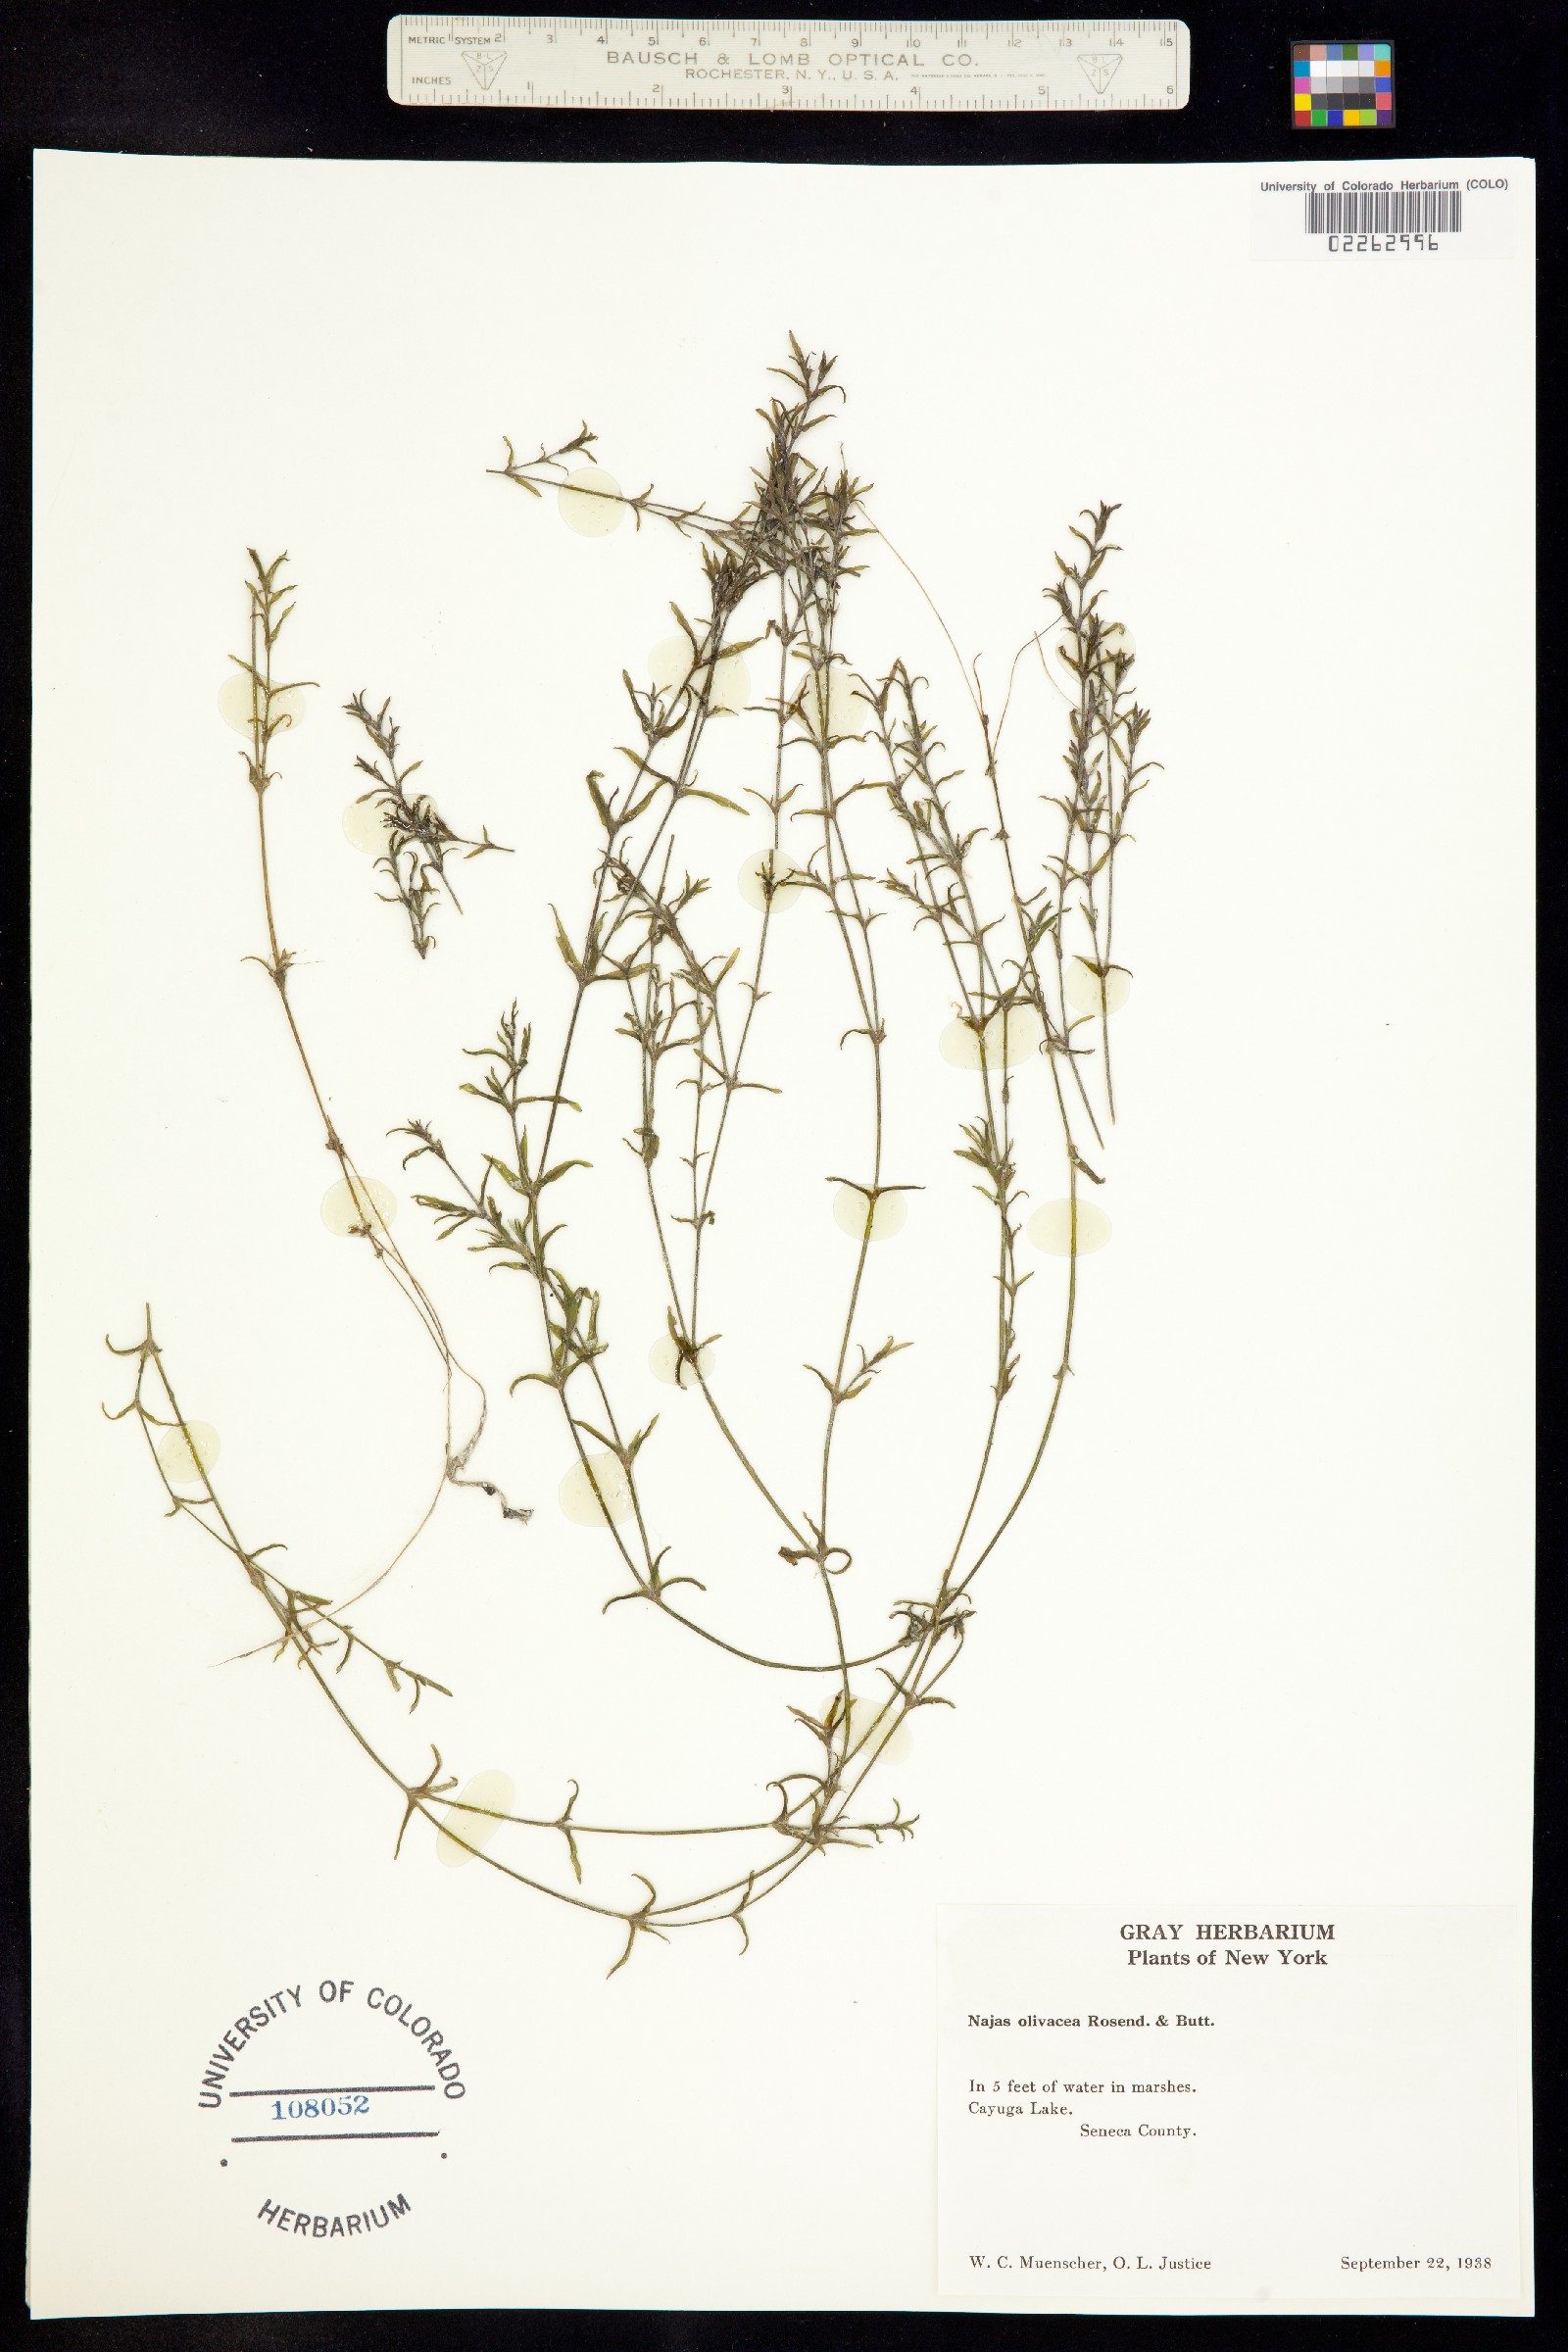 Najas guadalupensis ssp. olivacea image